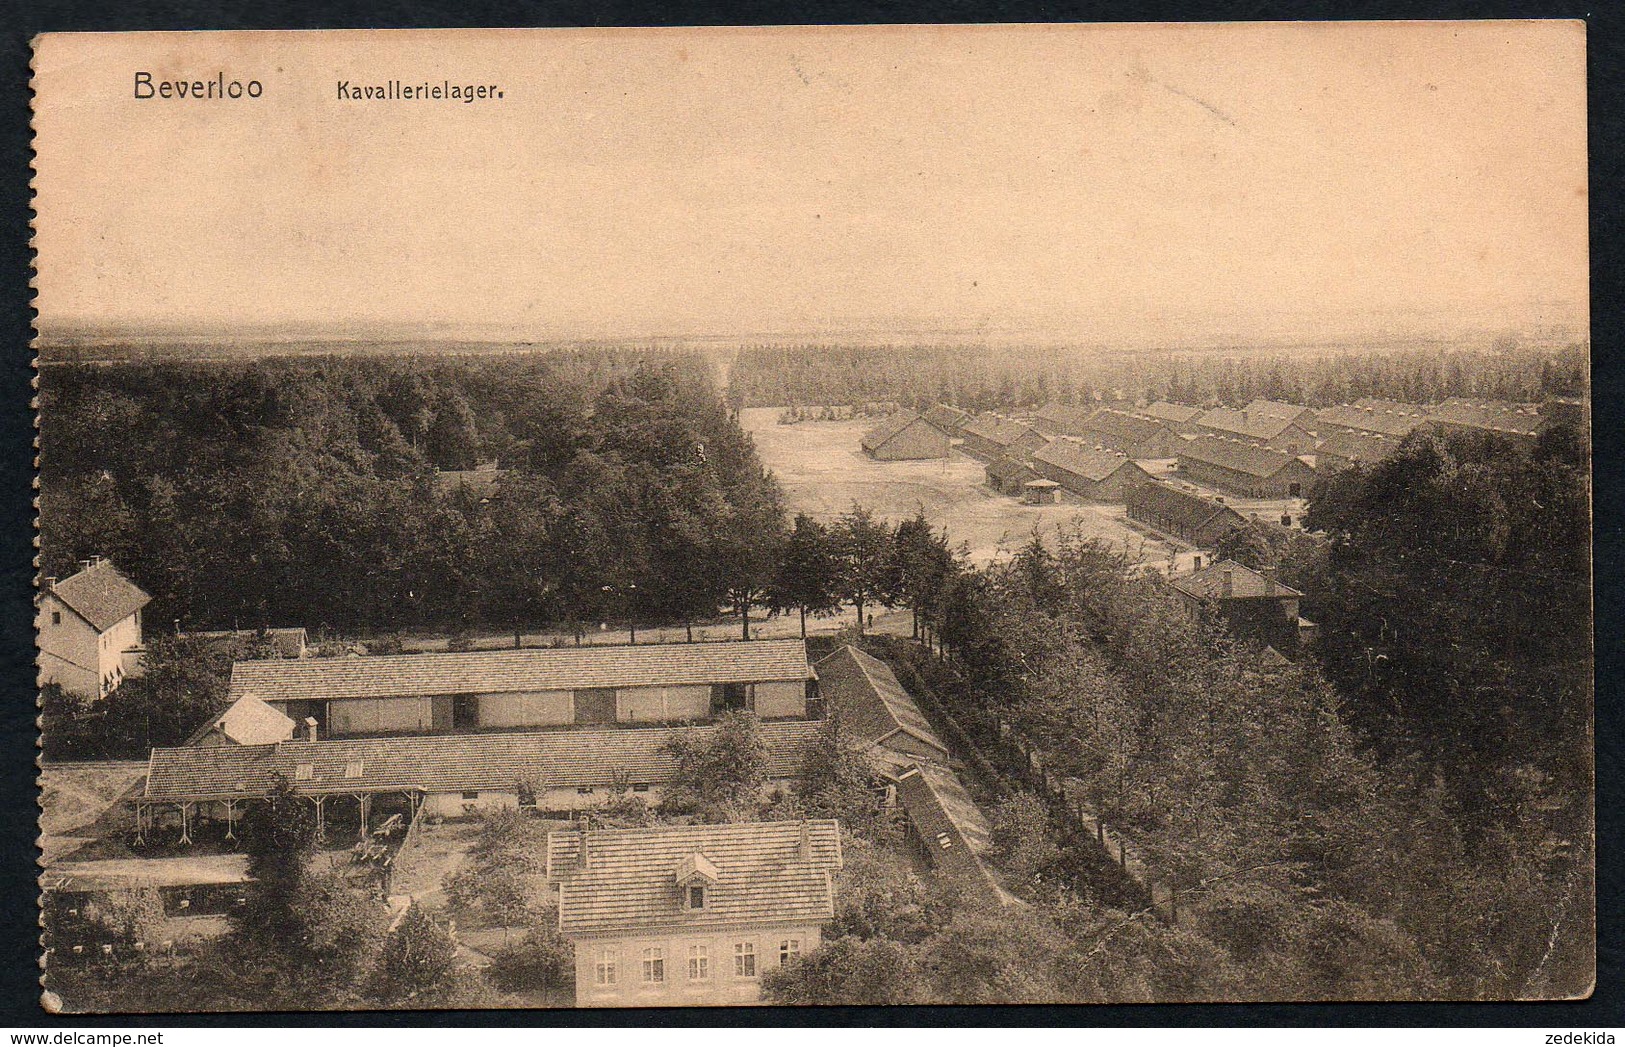 A3773 - Alte Ansichtskarte - Beverloo Berverlo - Kavallerielager - 1. WK WW - Feldpost 1917 - Beringen